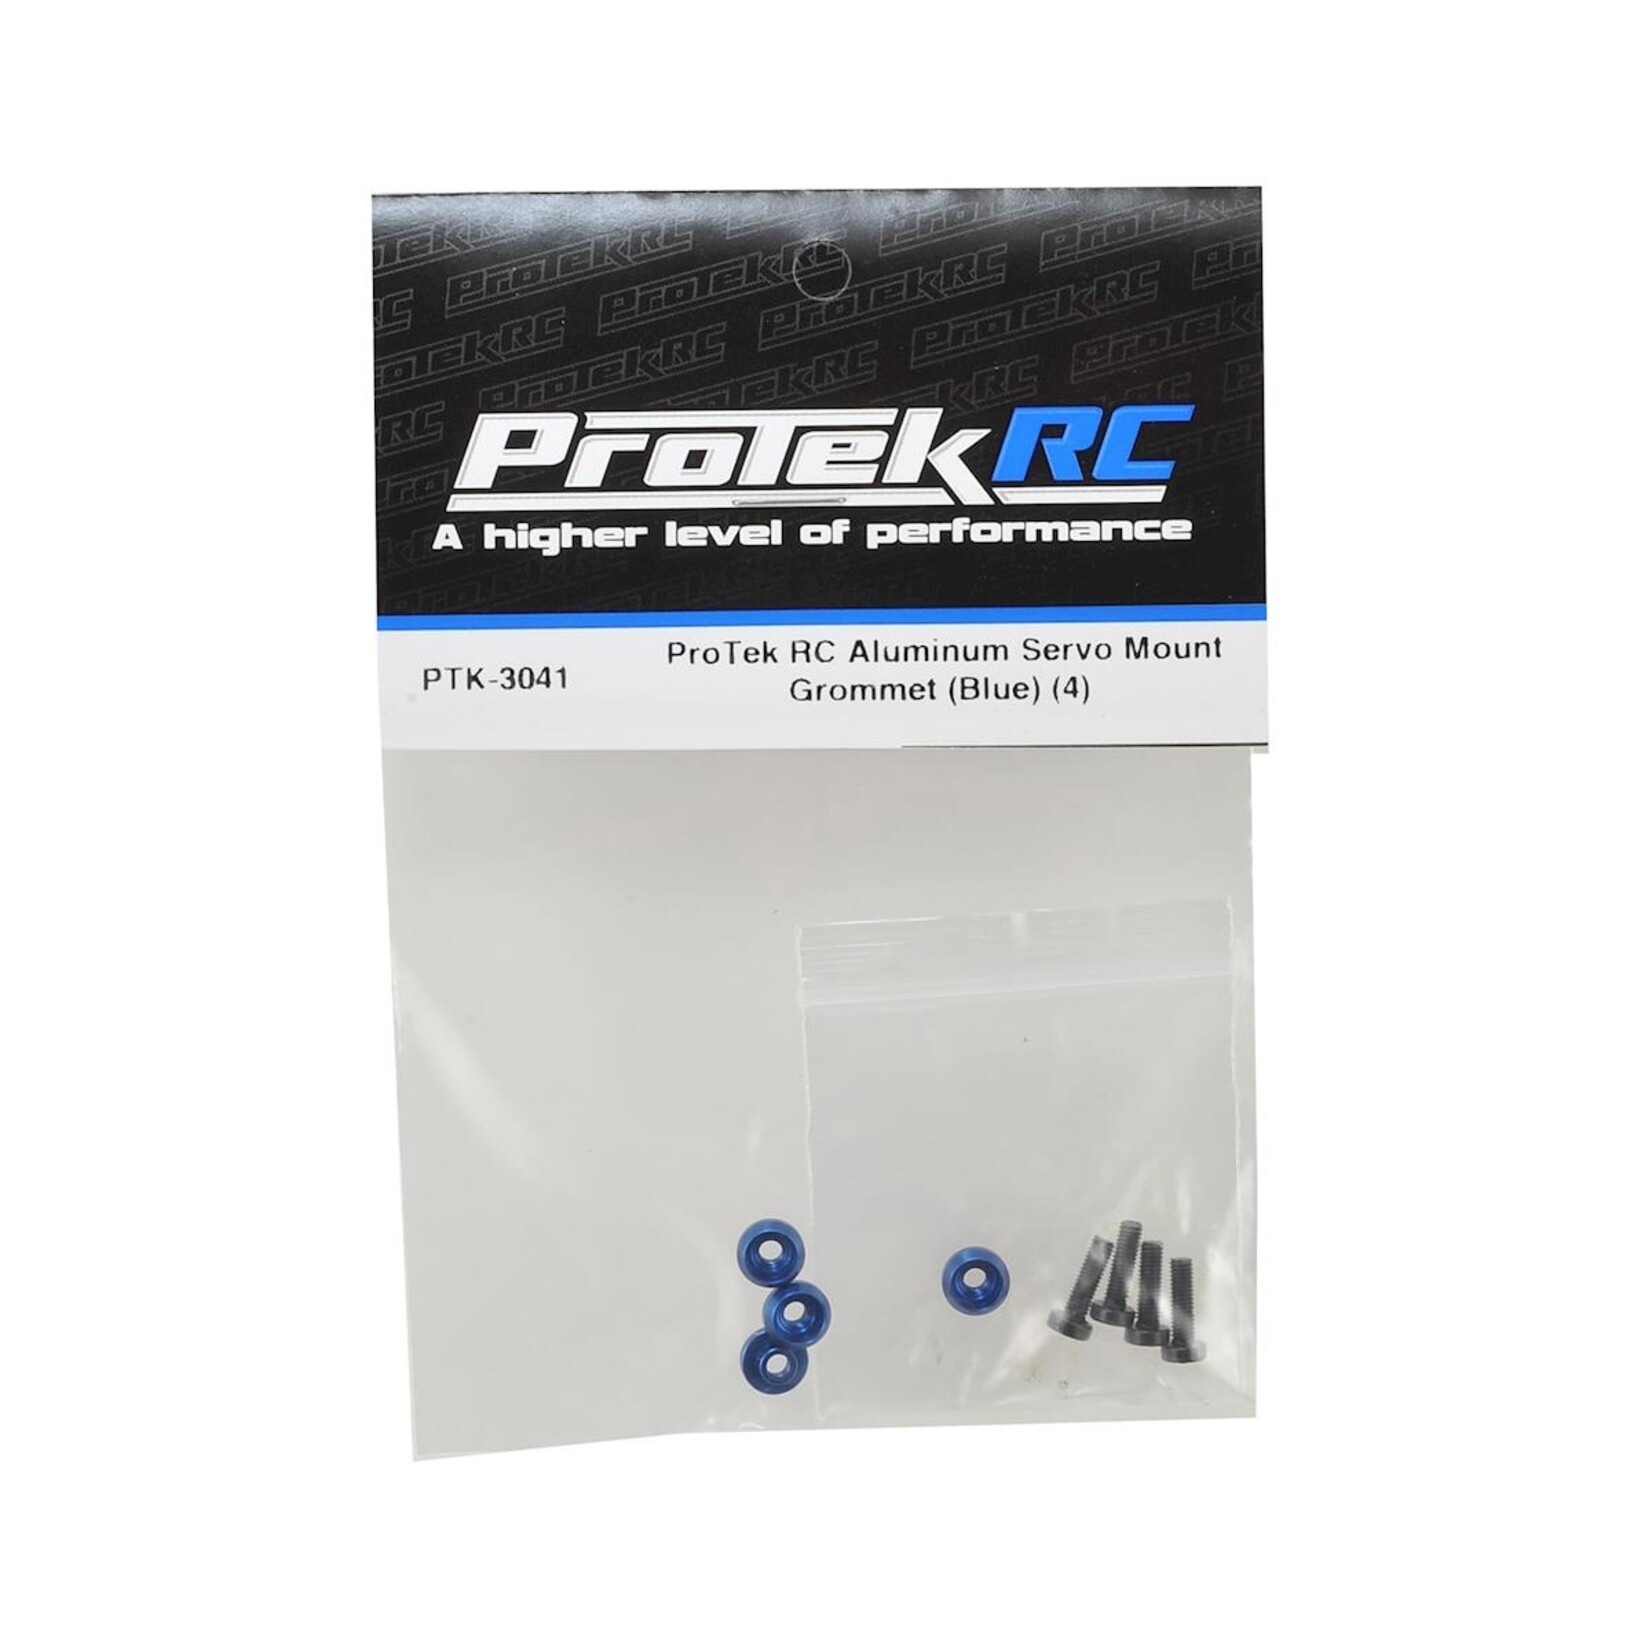 ProTek RC ProTek RC Aluminum Servo Mount Grommet (Blue) (4) #PTK-3041